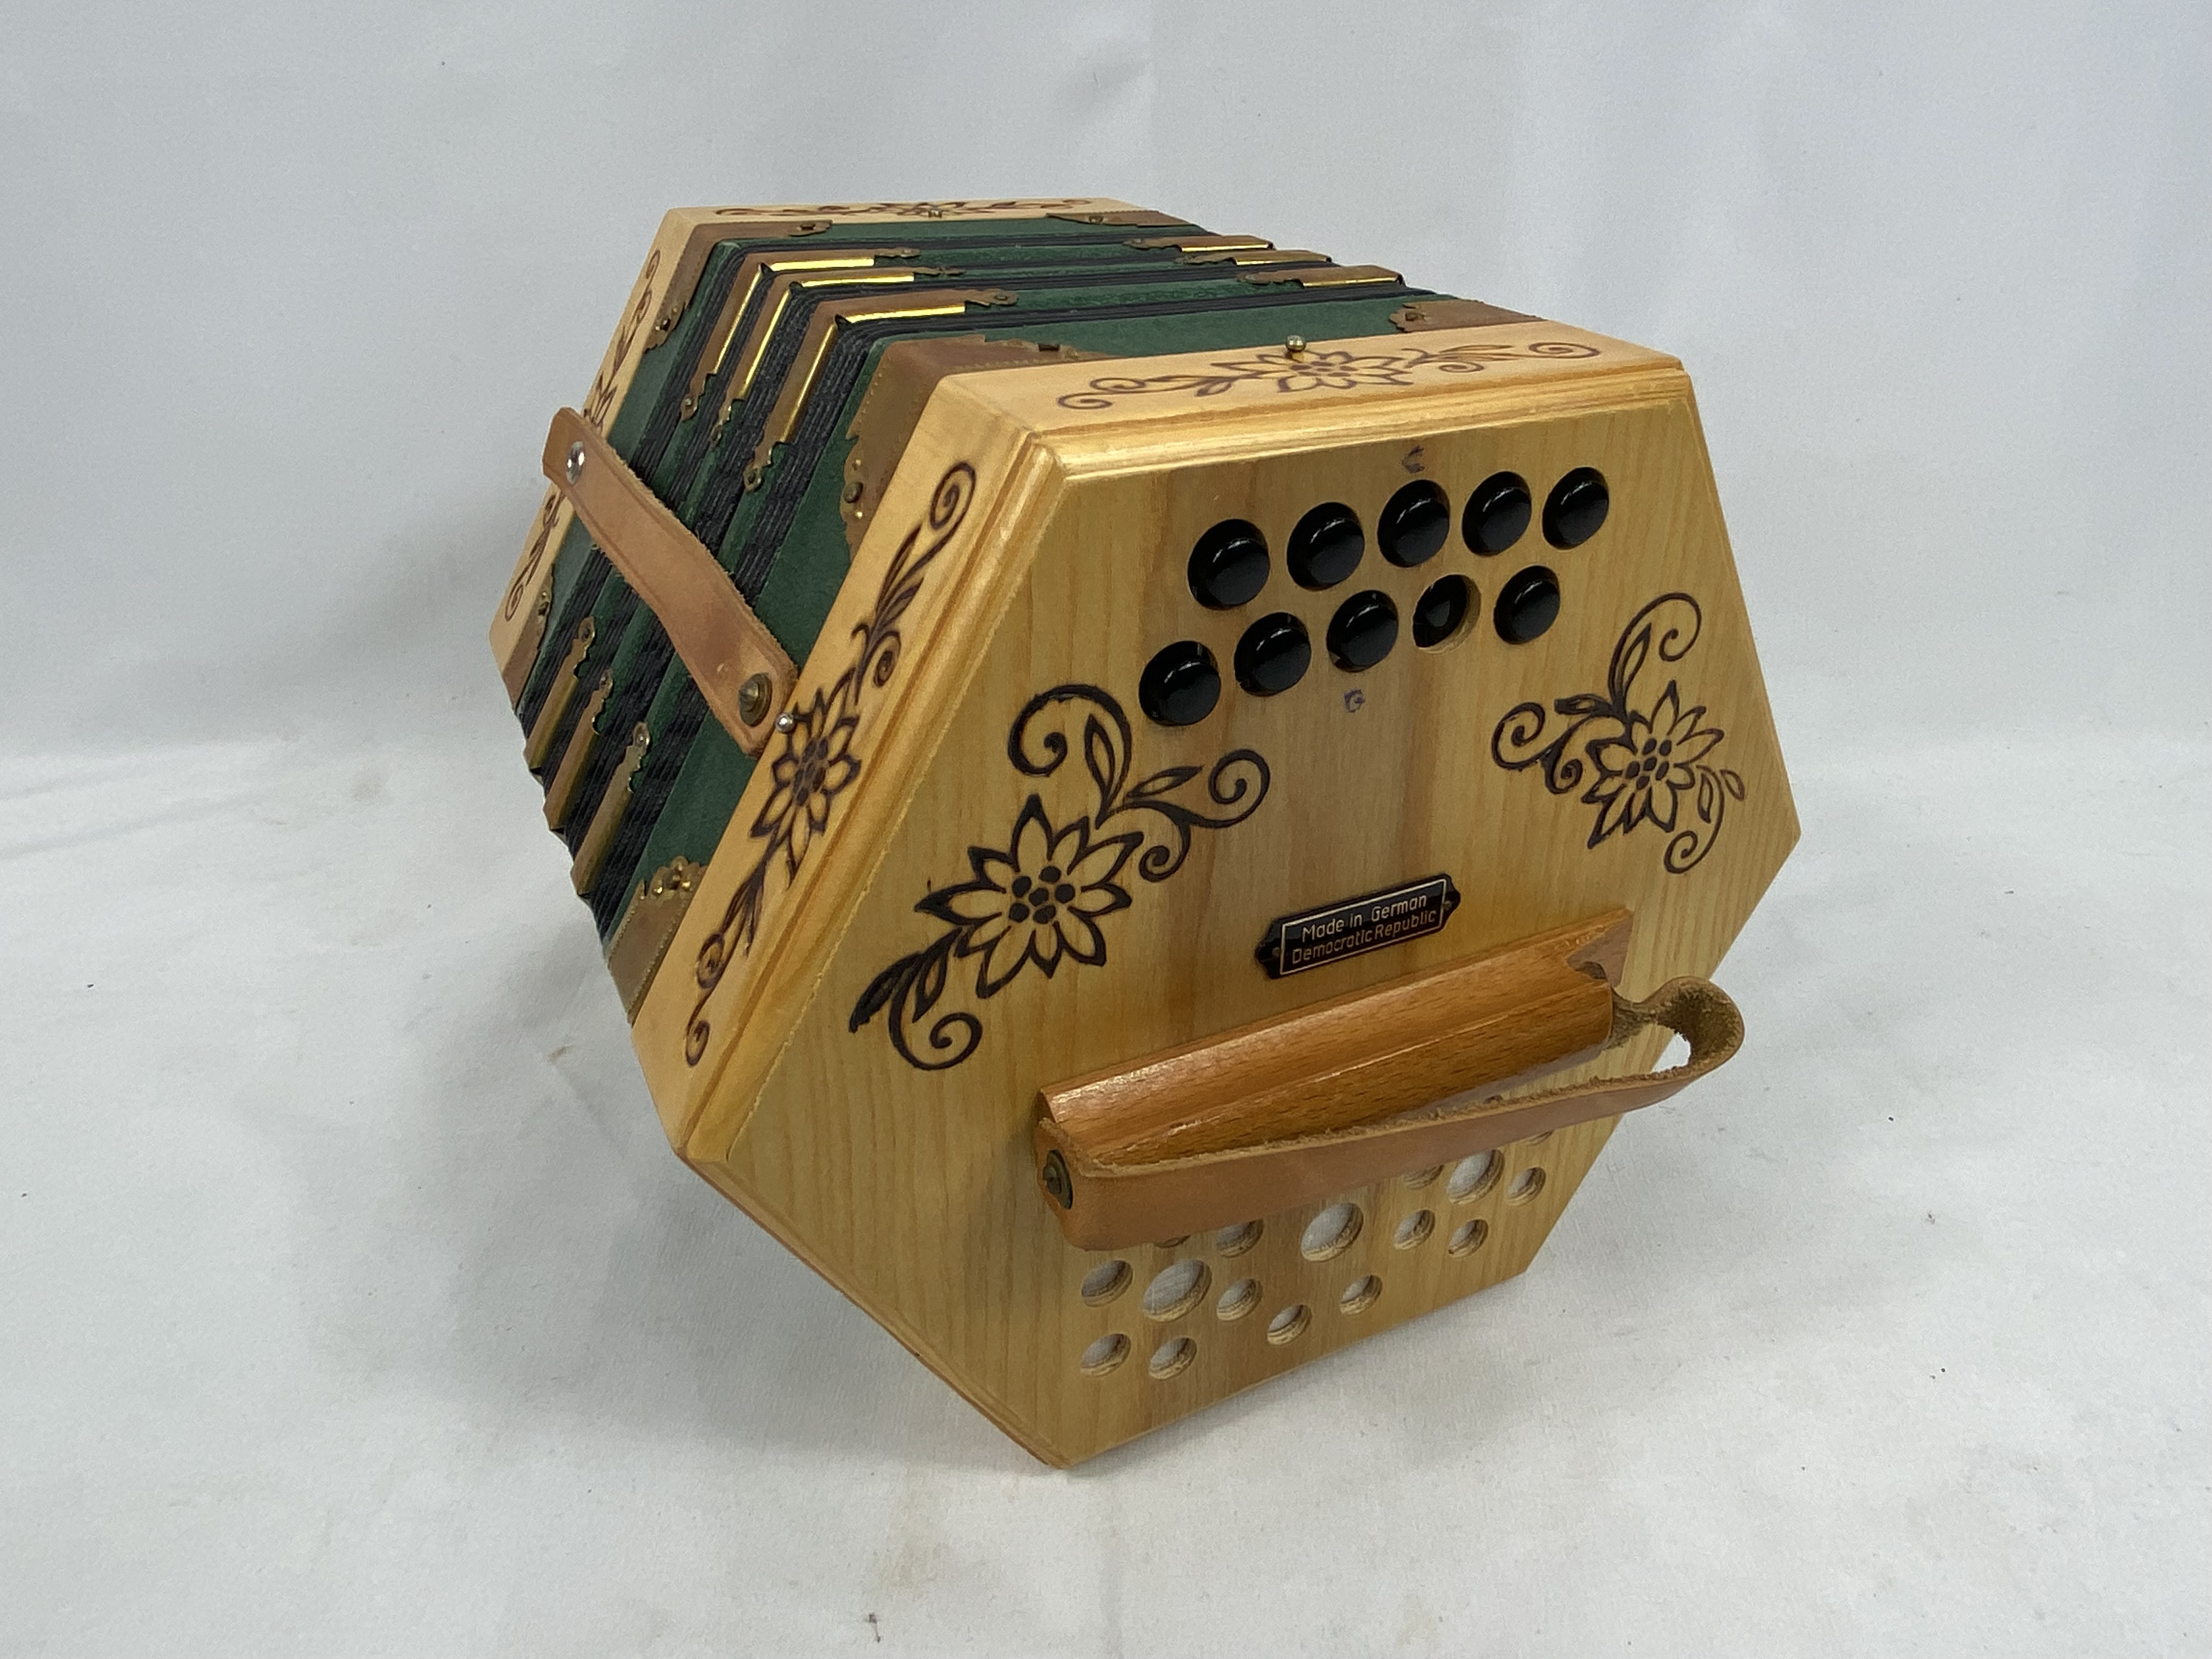 Galutter concertina